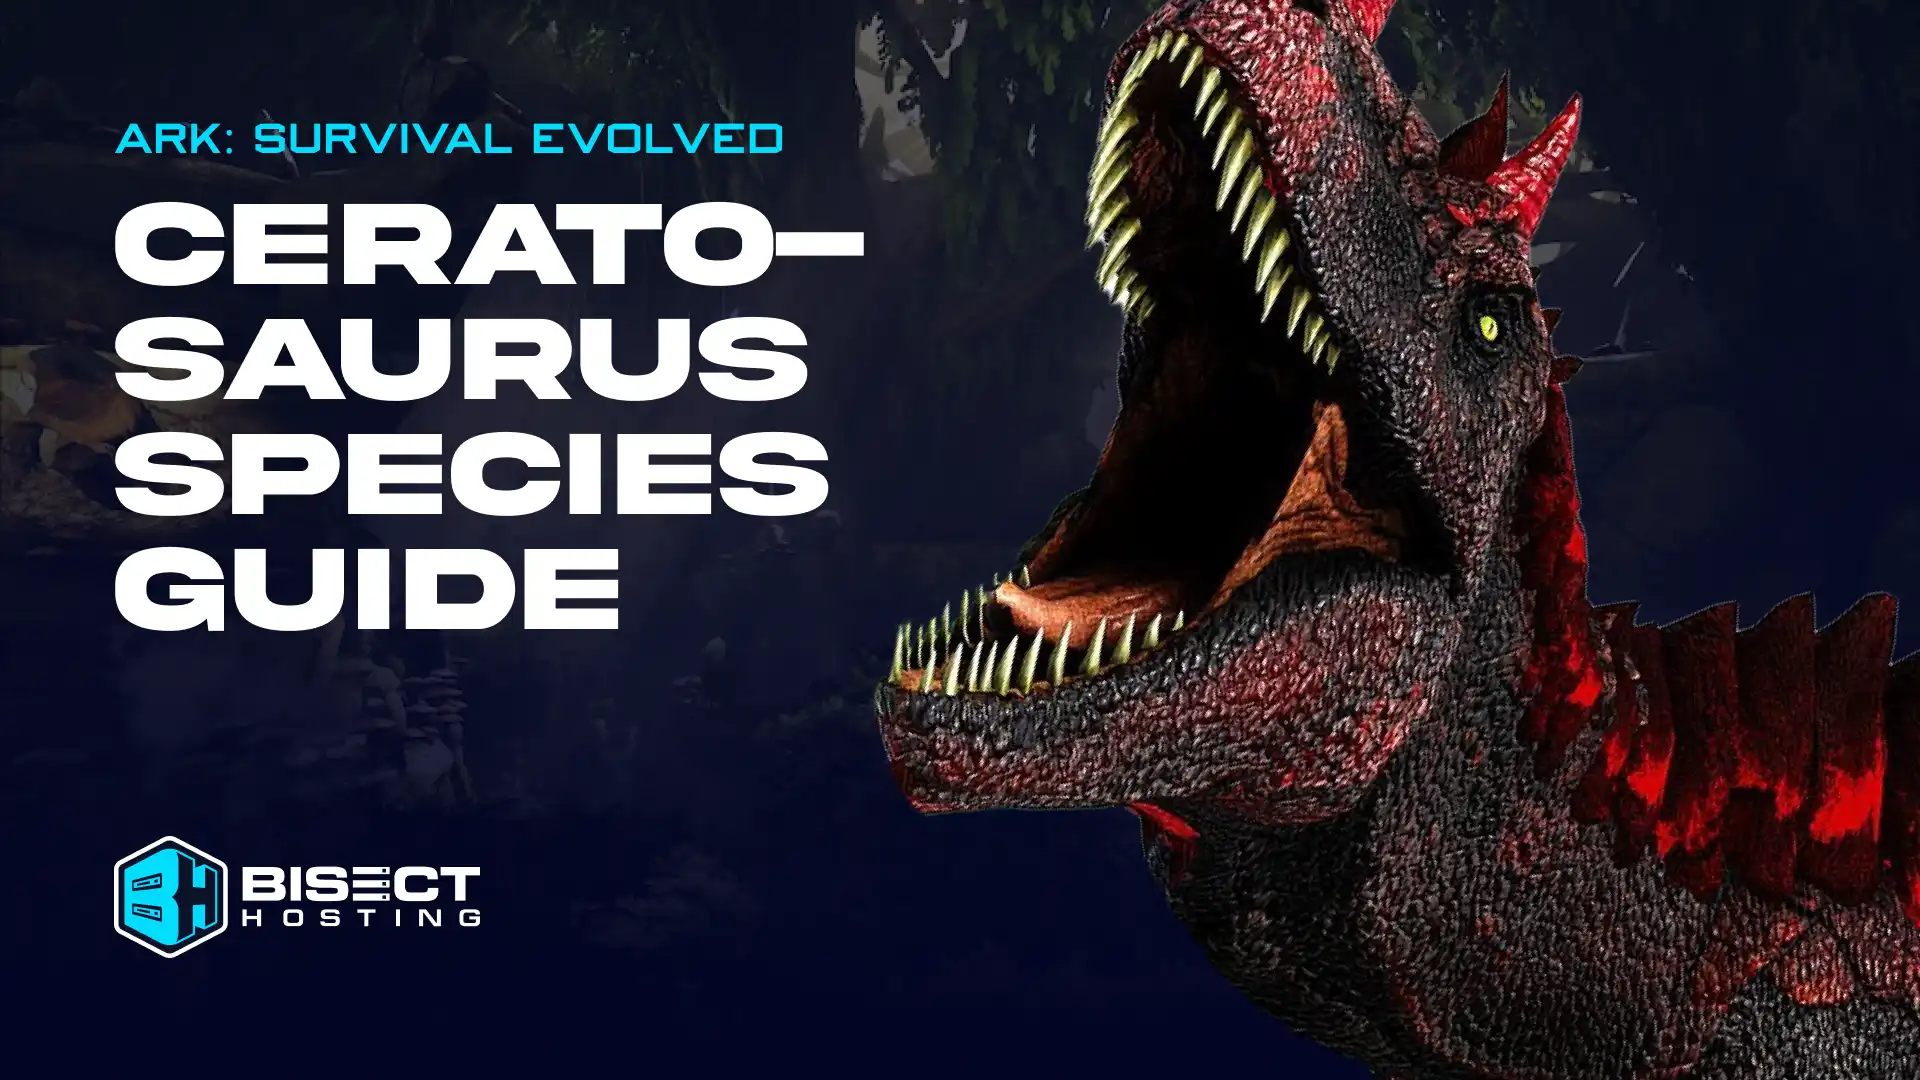 ARK: Survival Evolved Ceratosaurus Species Guide